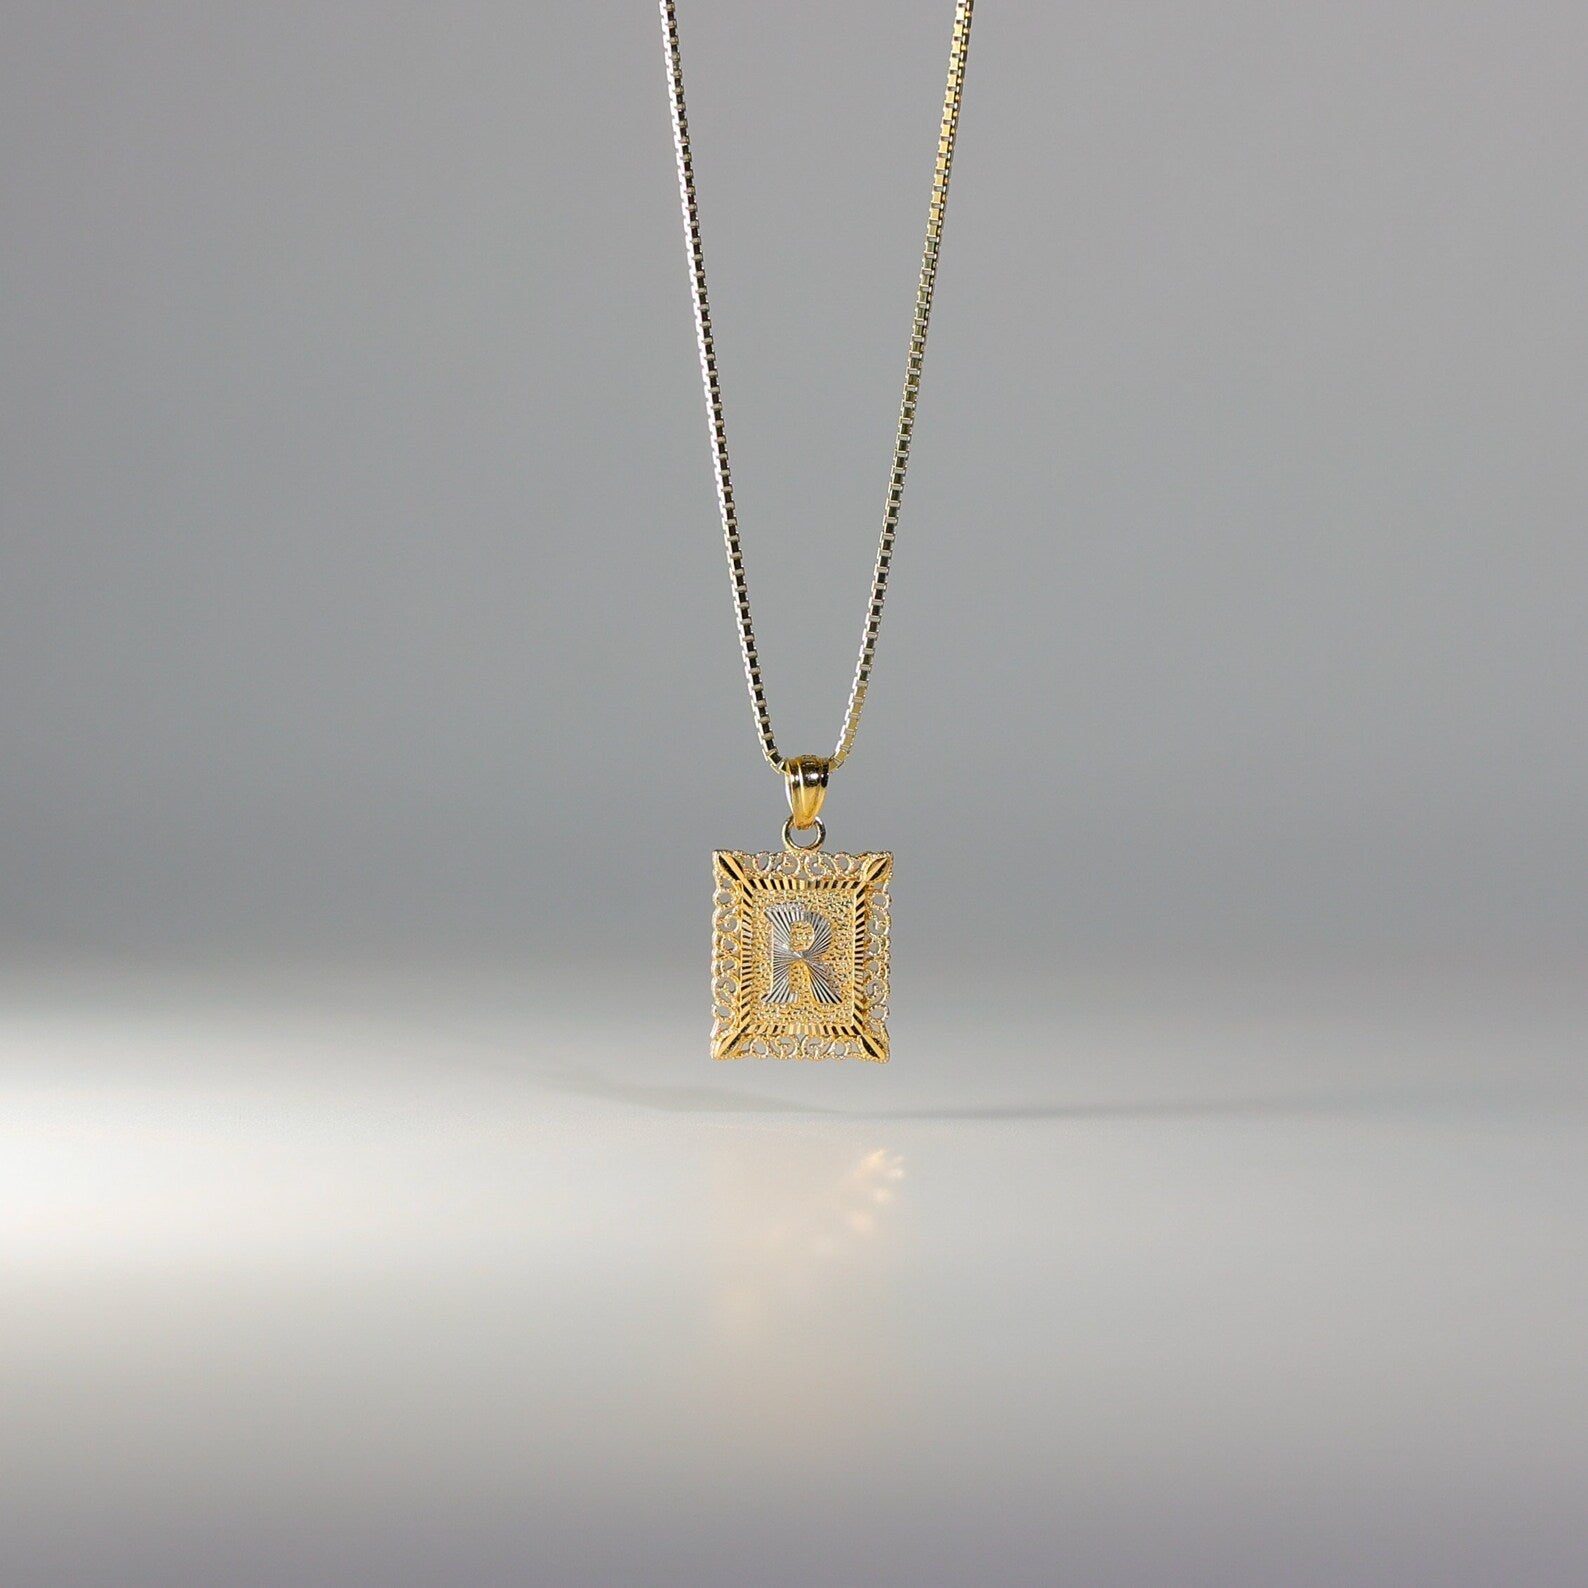 Gold Letter R Pendants | A-Z Gold Pendants - Charlie & Co. Jewelry